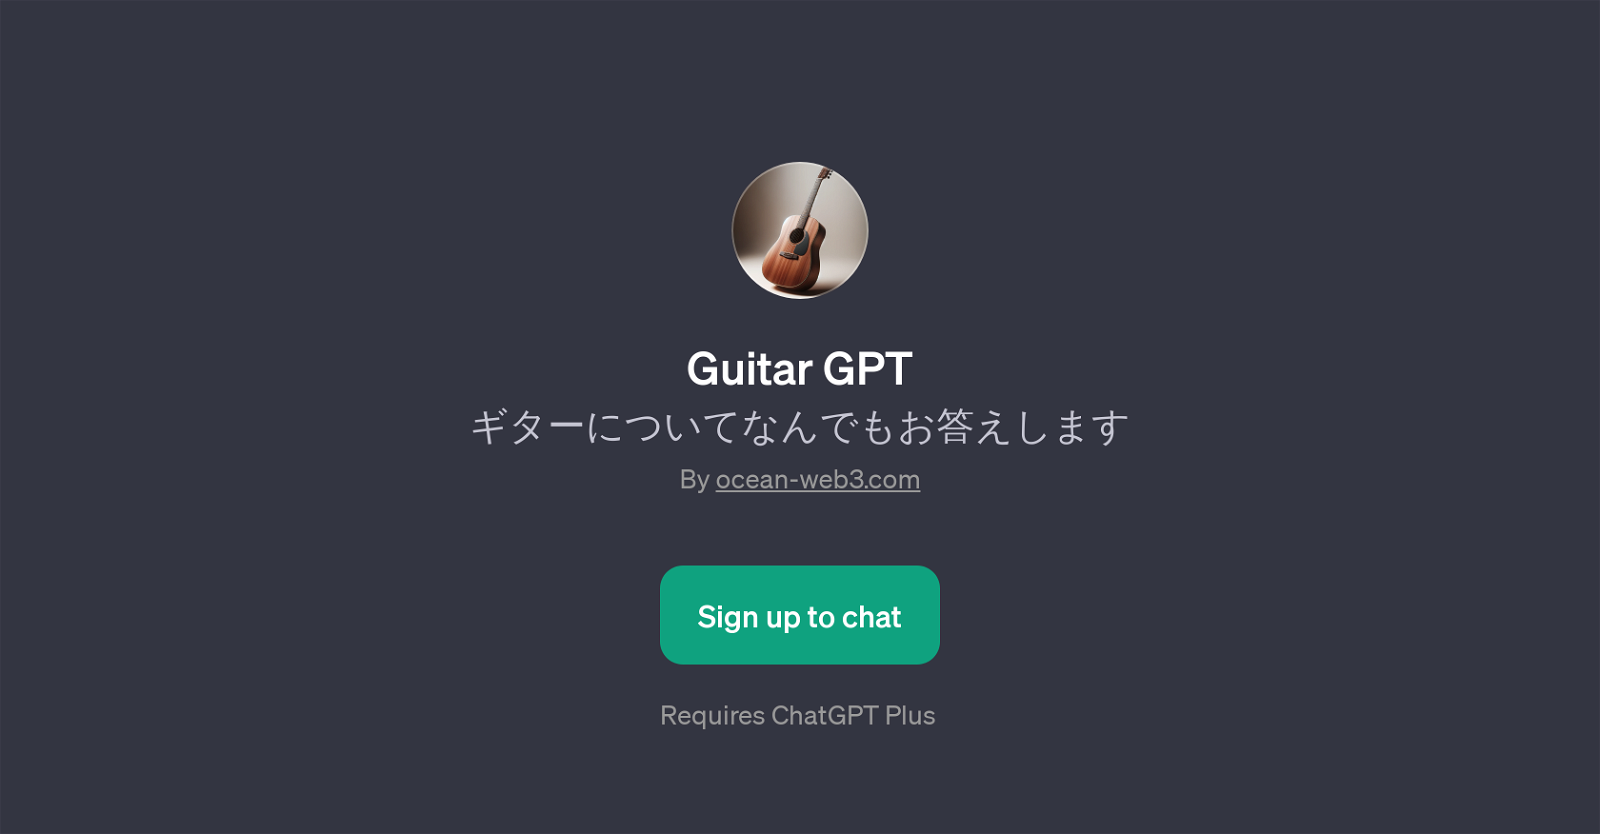 Guitar GPT website